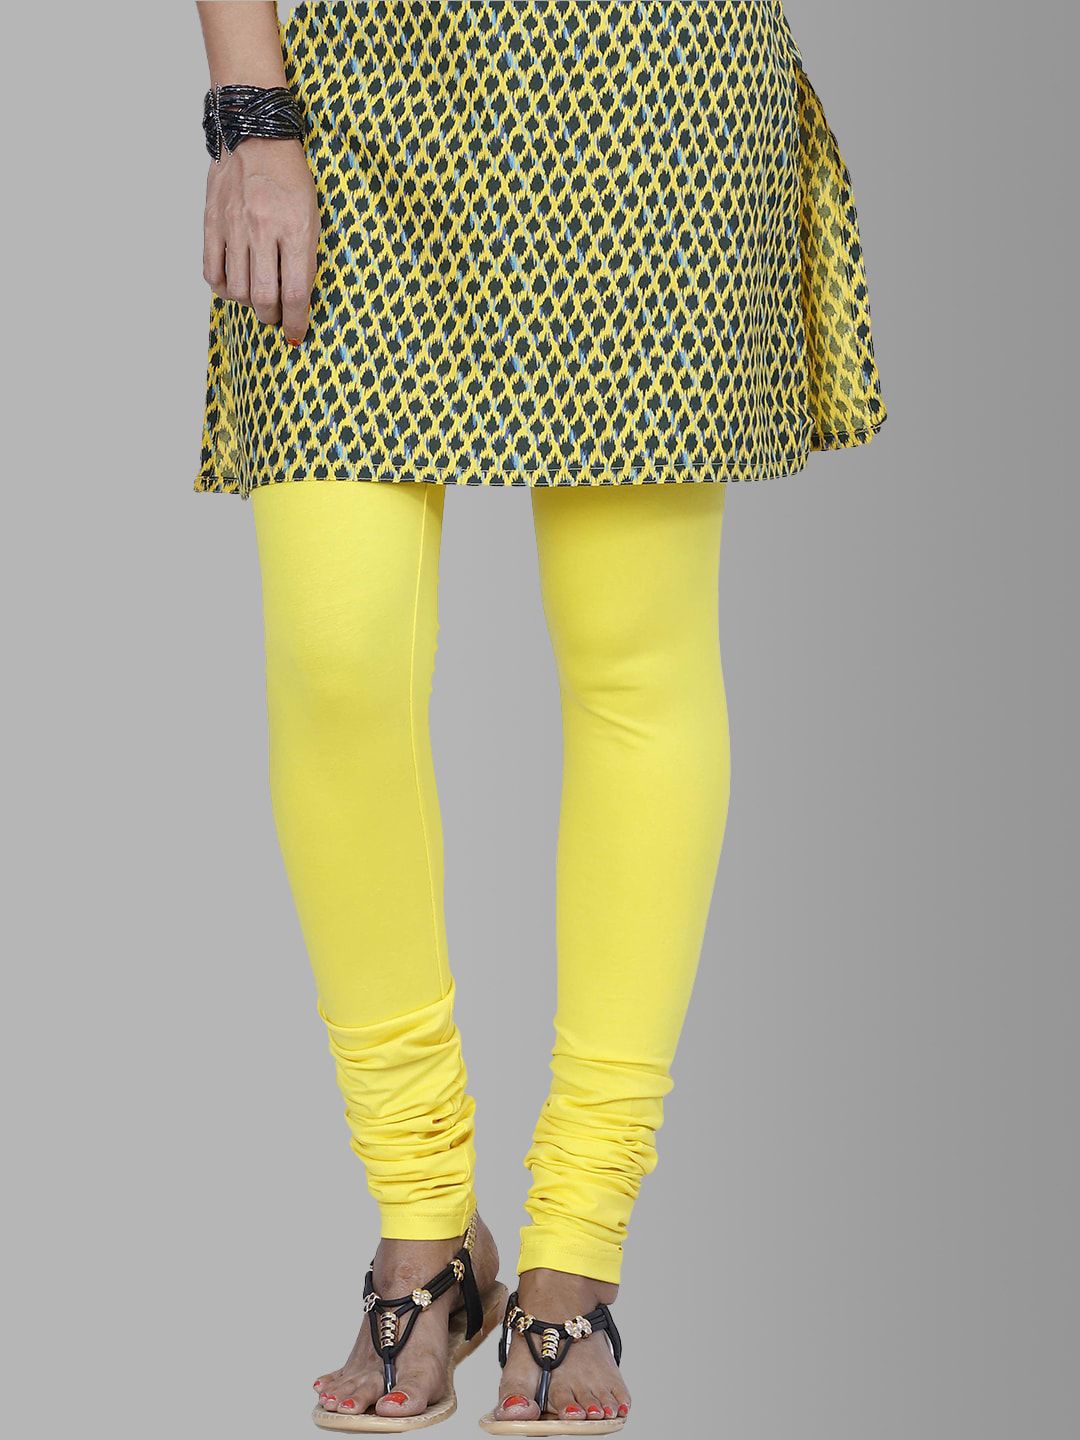 Dollar Missy Lemon Yellow Cotton Leggings